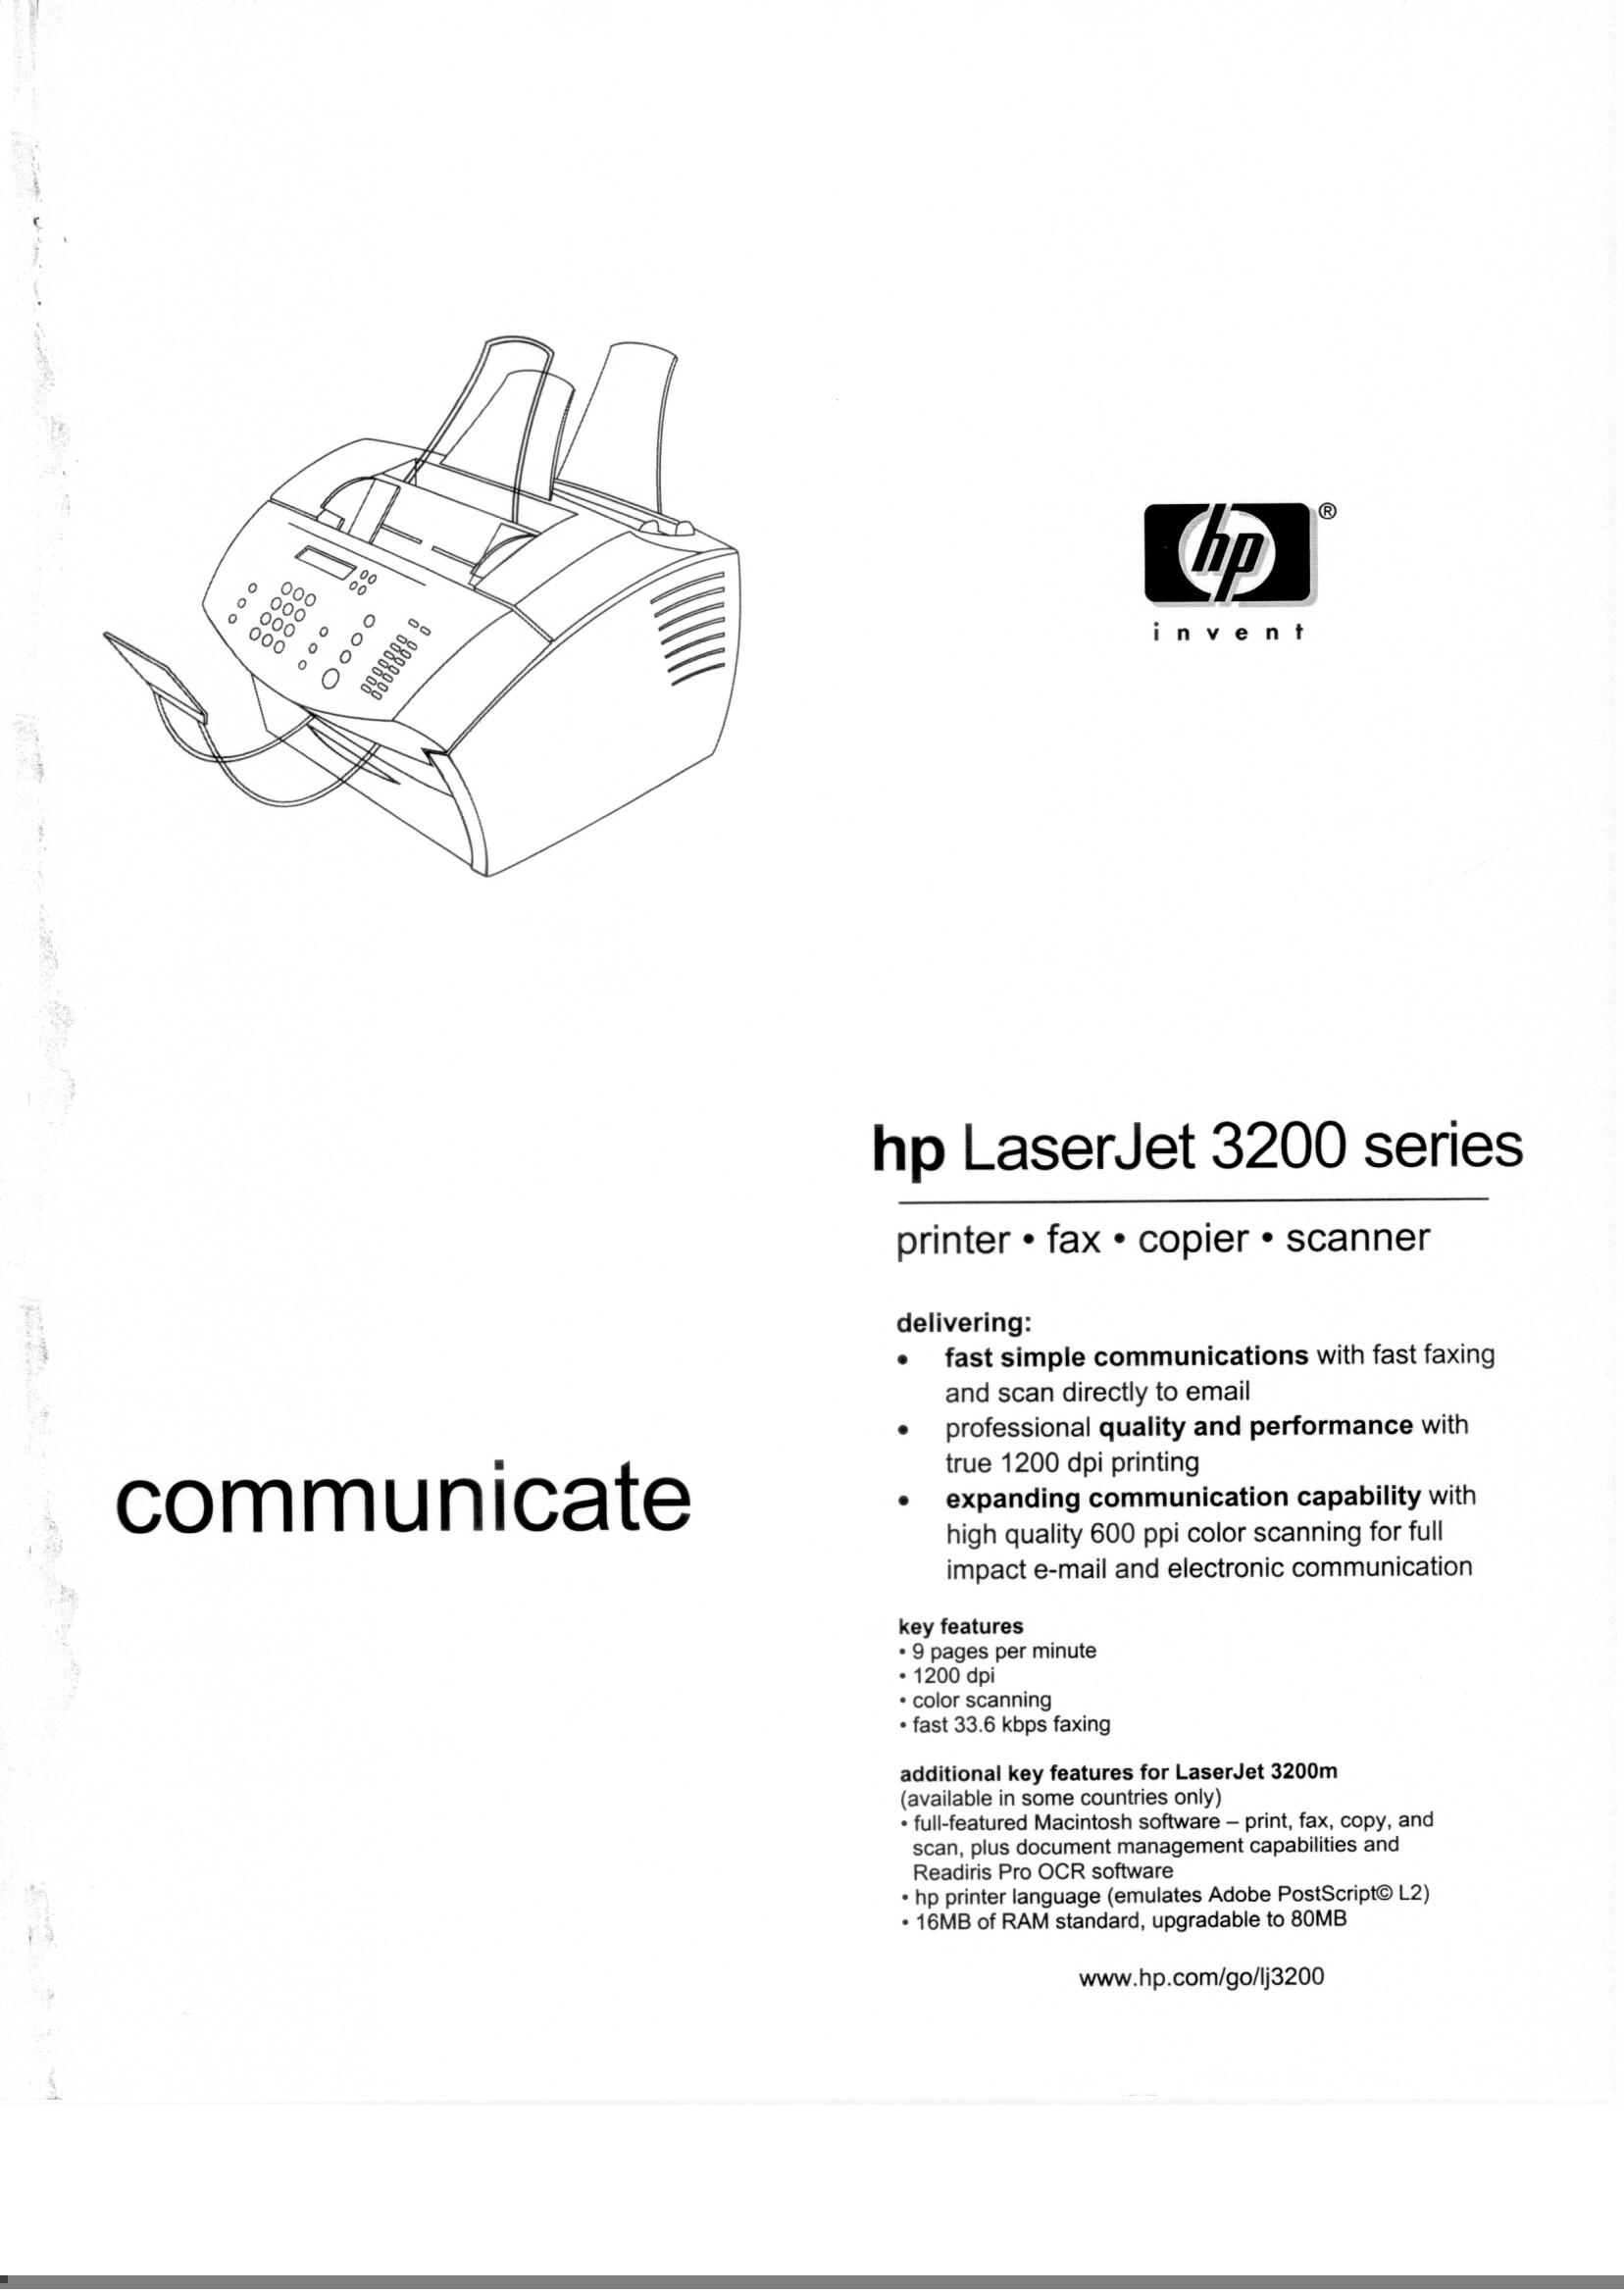 Solved: Vertical Smudge Line on HP LaserJet 3200 (Images included) - HP  Support Community - 7724110